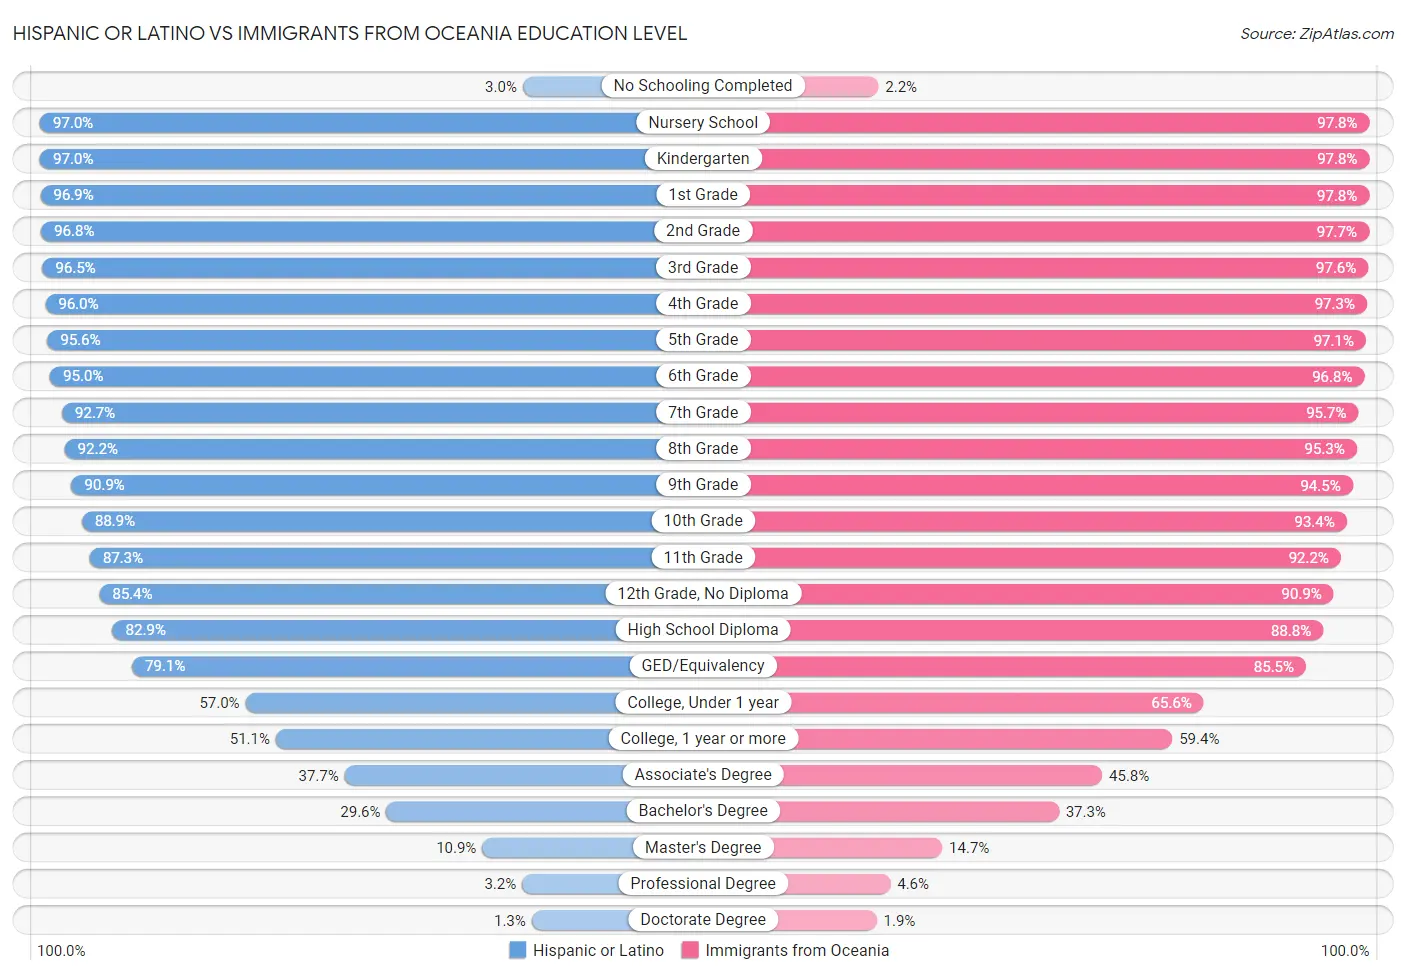 Hispanic or Latino vs Immigrants from Oceania Education Level